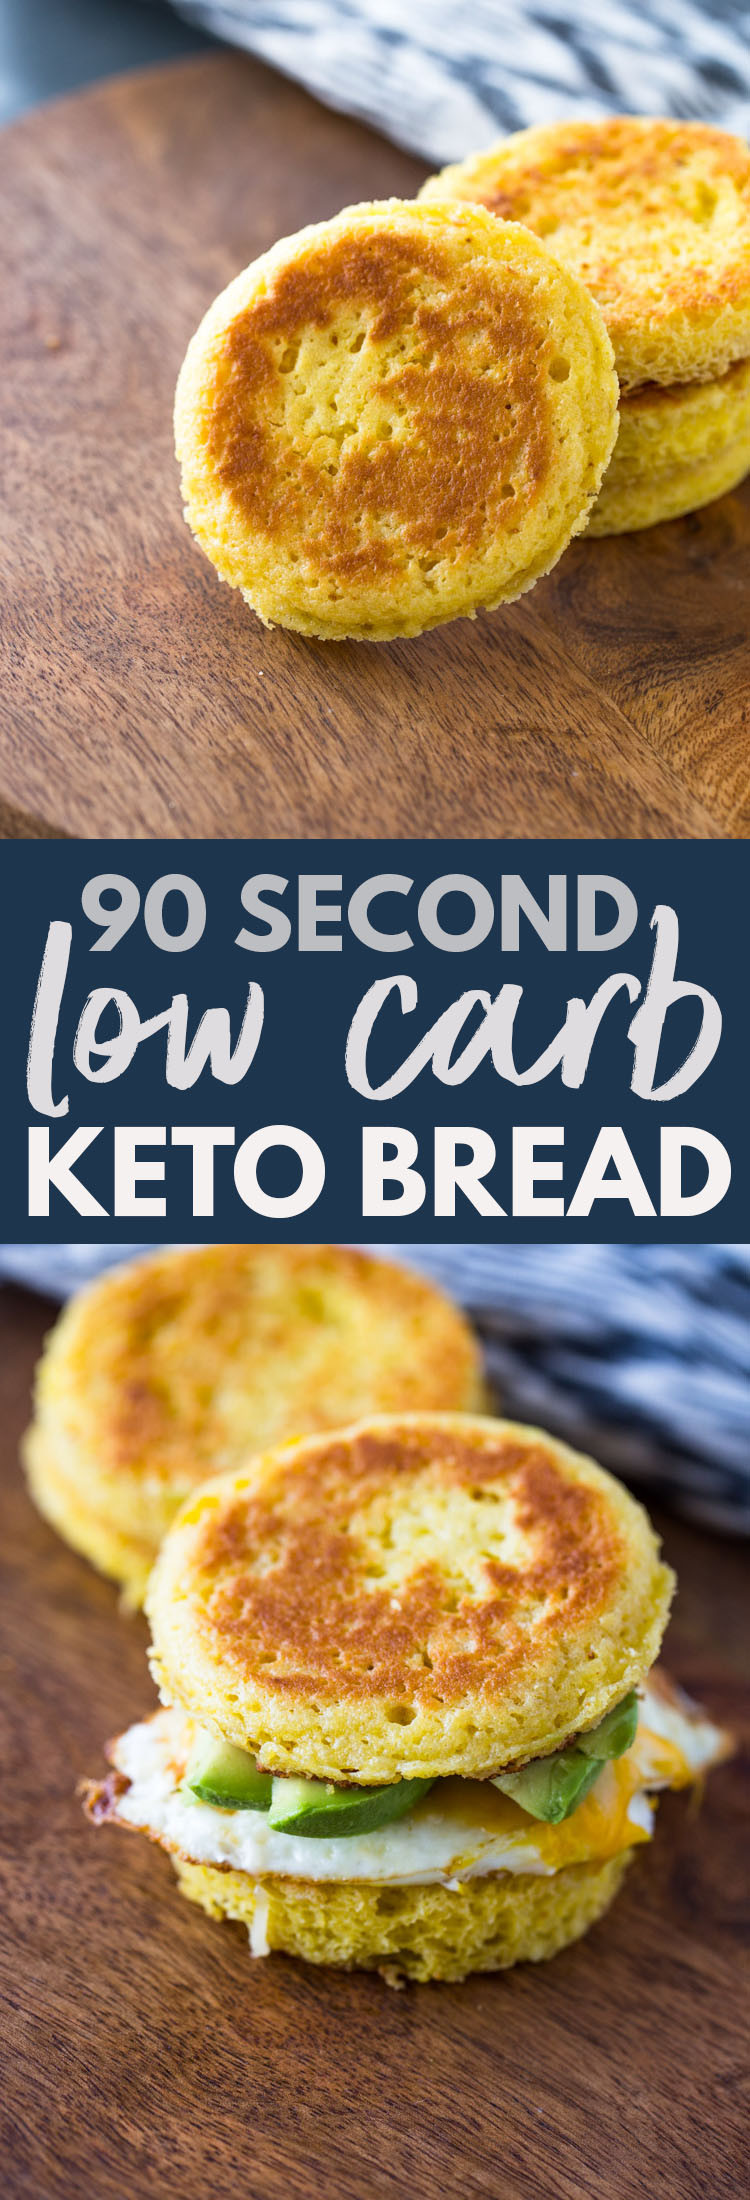 90 Second Keto Bread Dessert 90 Second Microwavable Low Carb Keto Bread